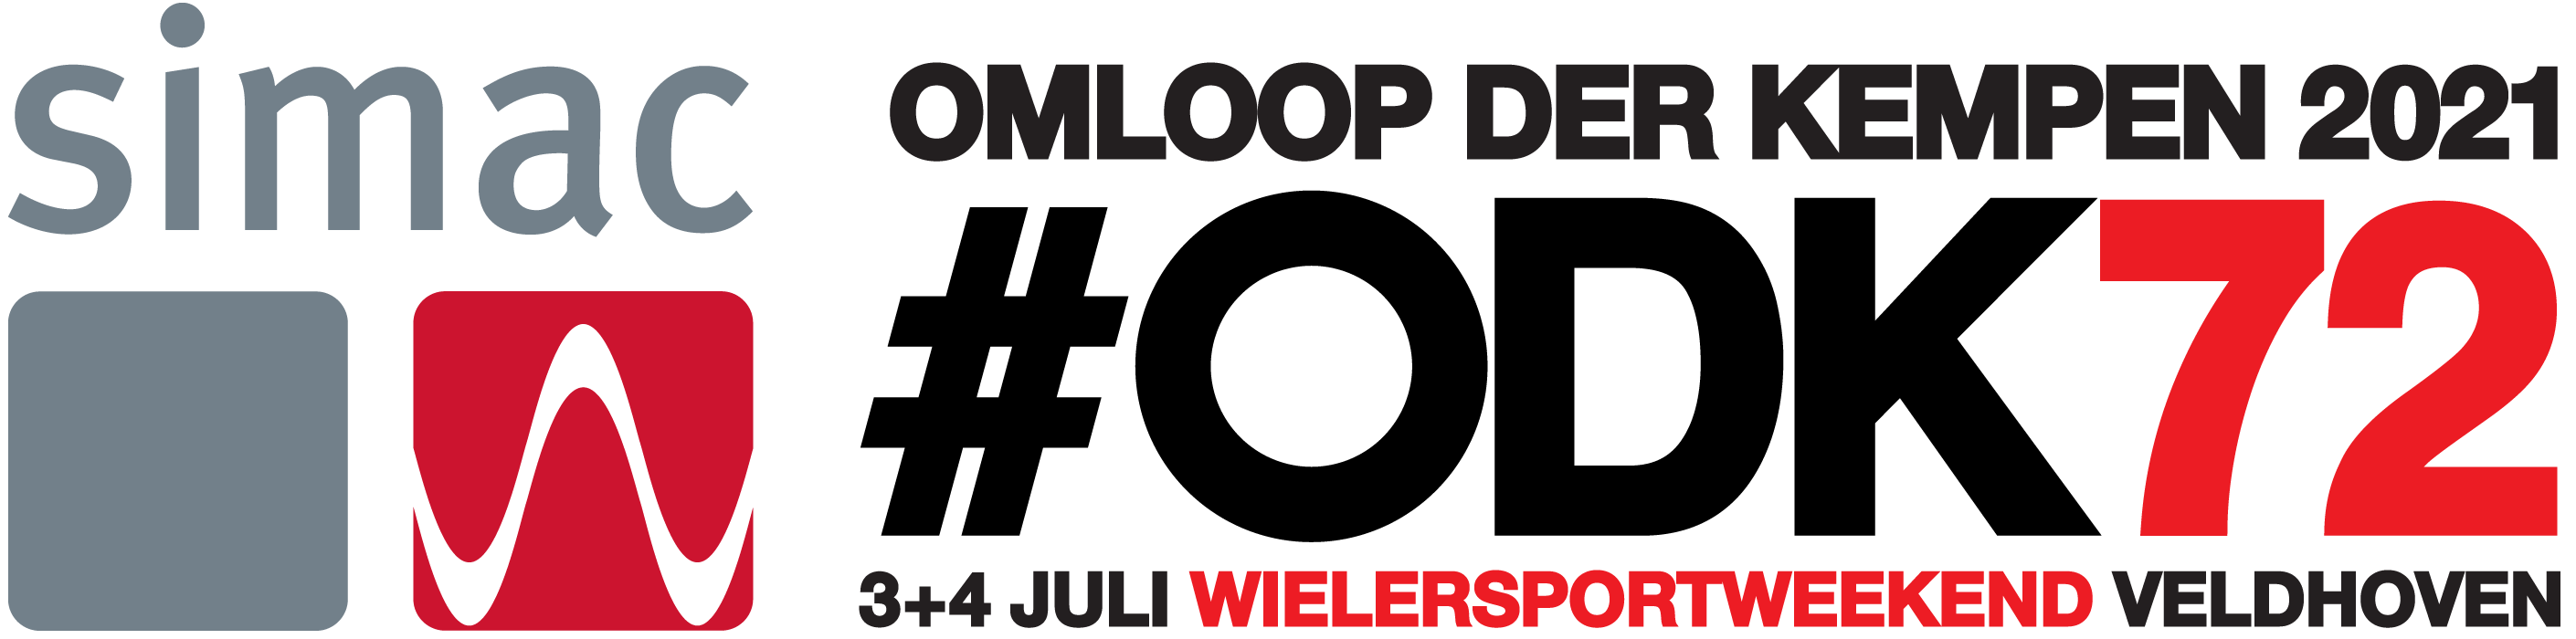 logo Simac Omloop der Kempen